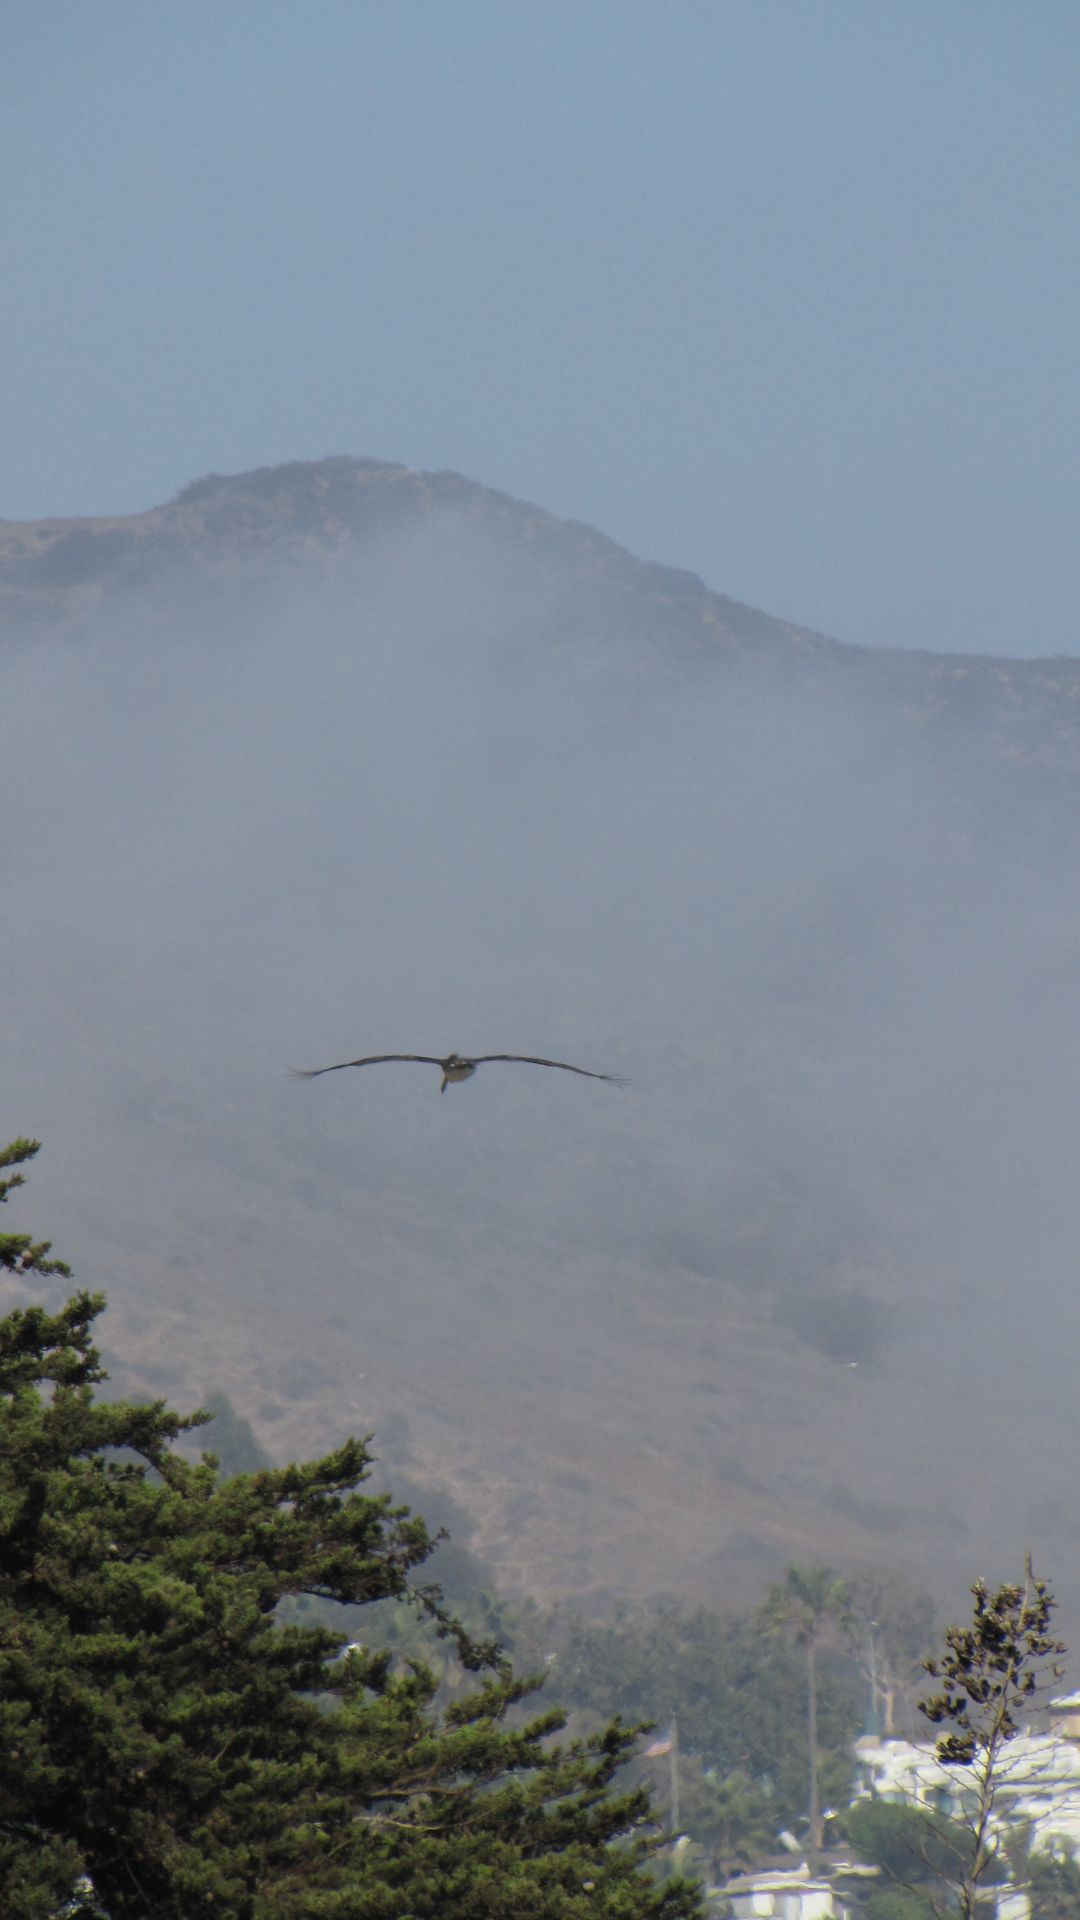 Pacific Coast Hwy, LA, CA, USA - Seagulls have fog-radar